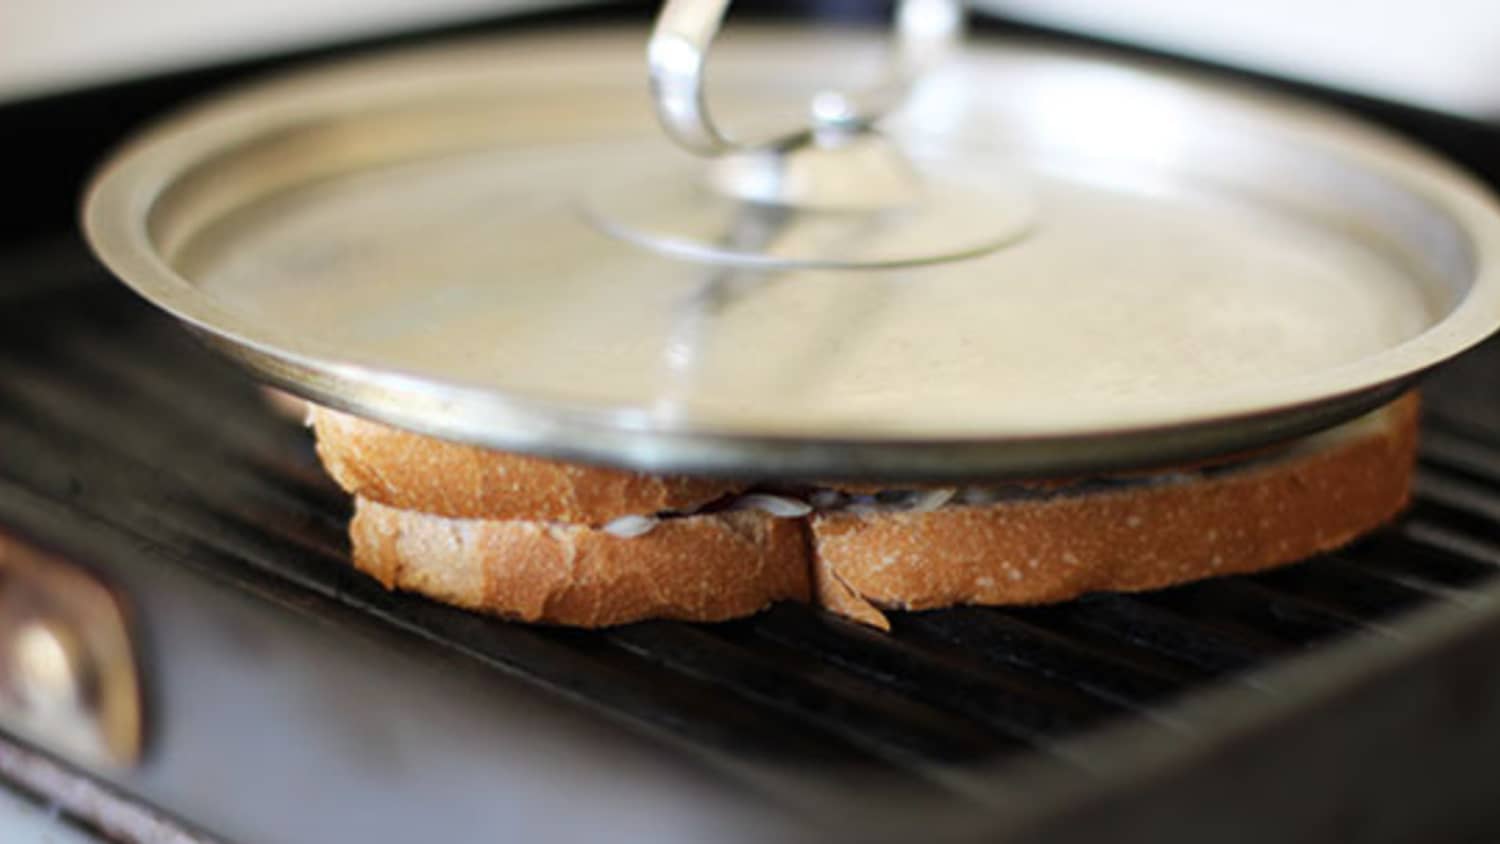 5 Ways to Make a Hot, Crispy Sandwich Without a Panini Press